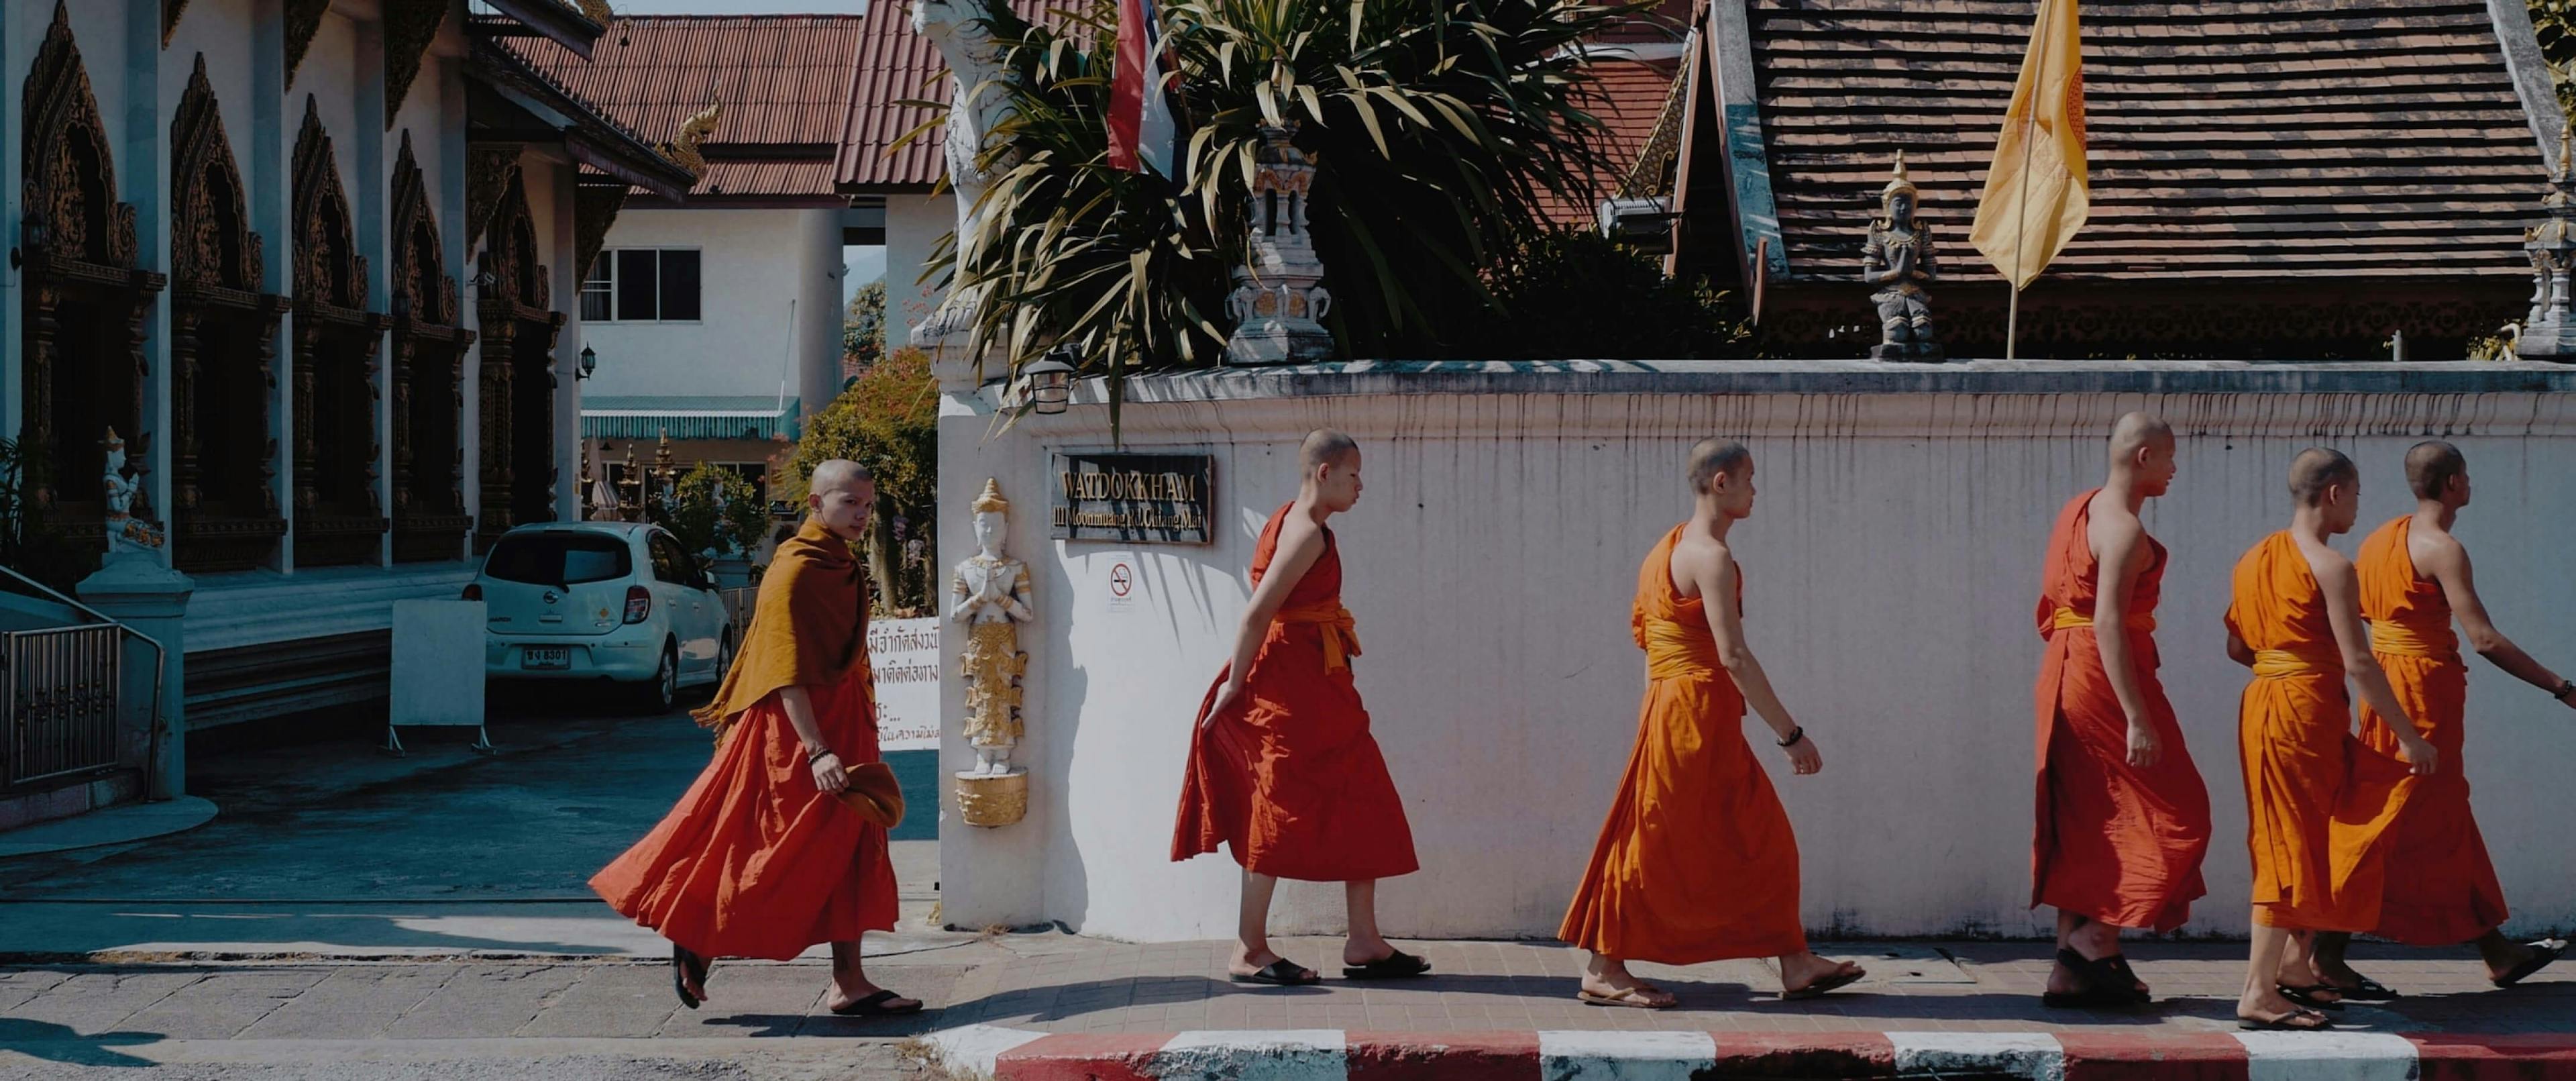 Monks walking